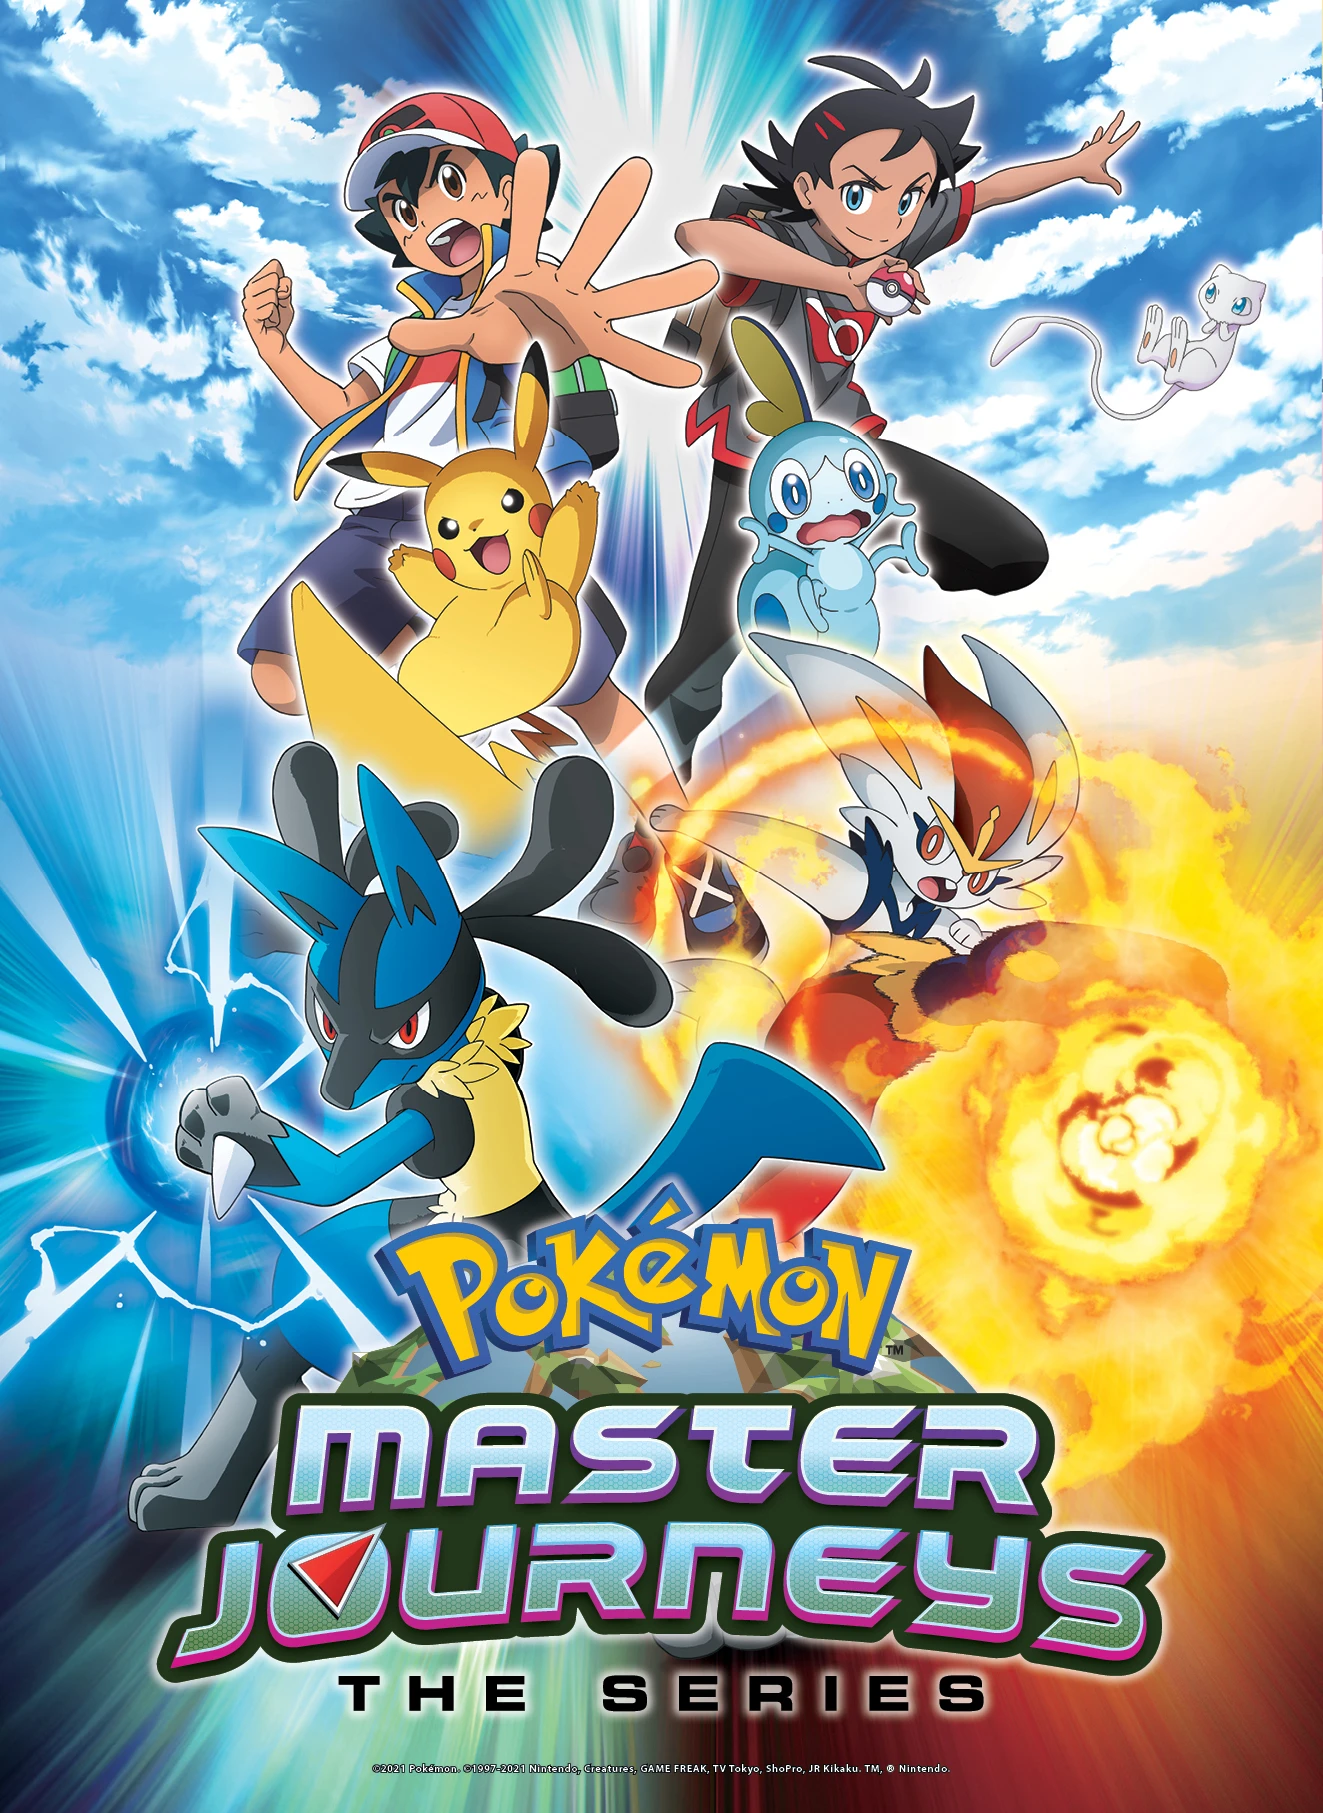 Hành trình Pokémon: Loạt phim (Pokémon Master Journeys) | Pokémon Journeys: The Series (2021)